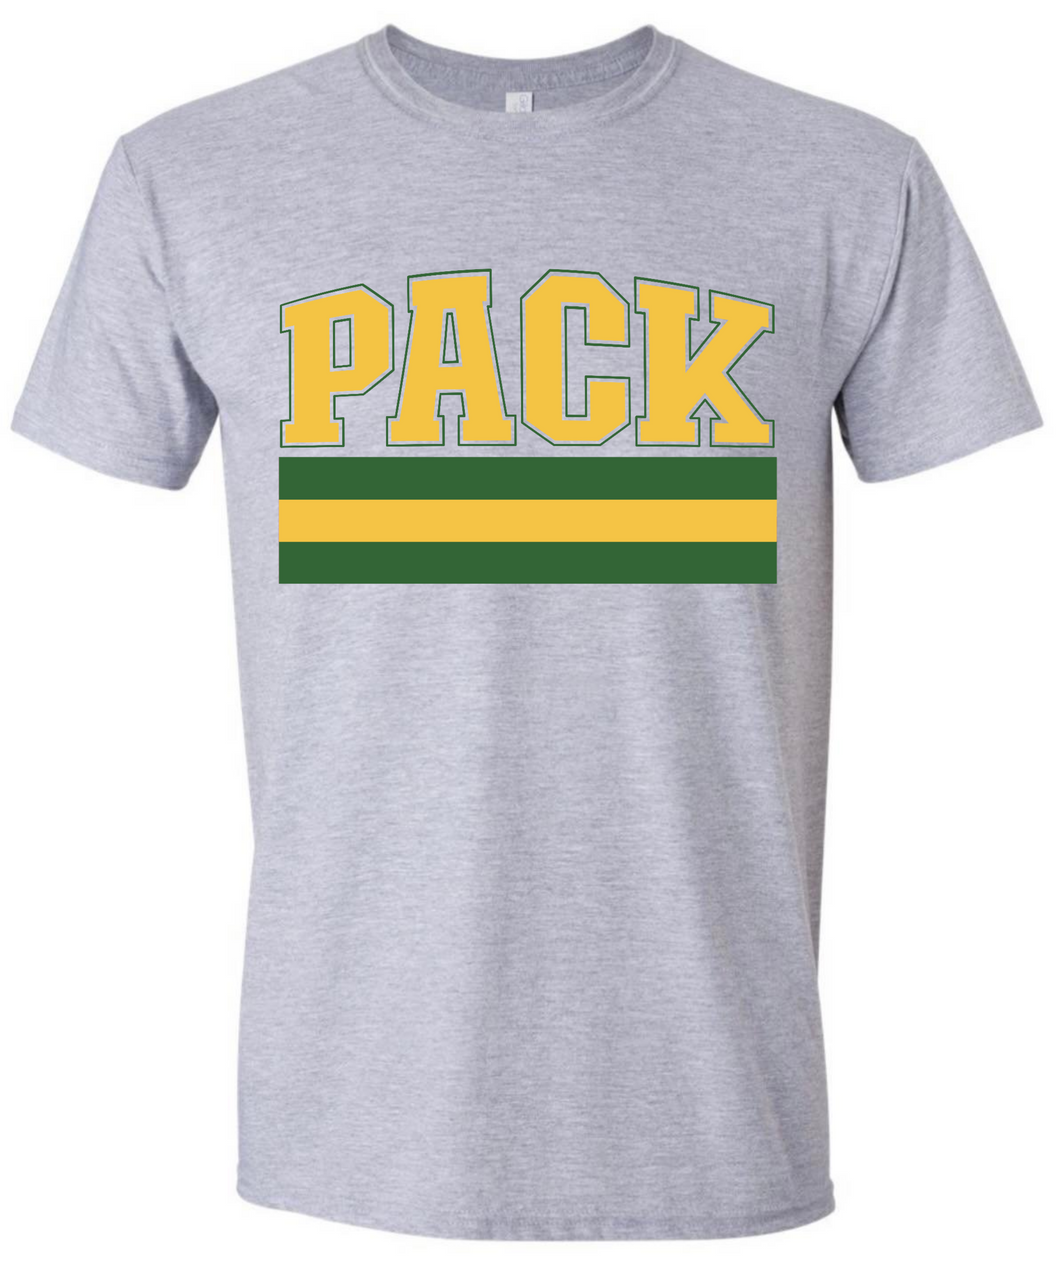 Pack Varsity Line Tshirt